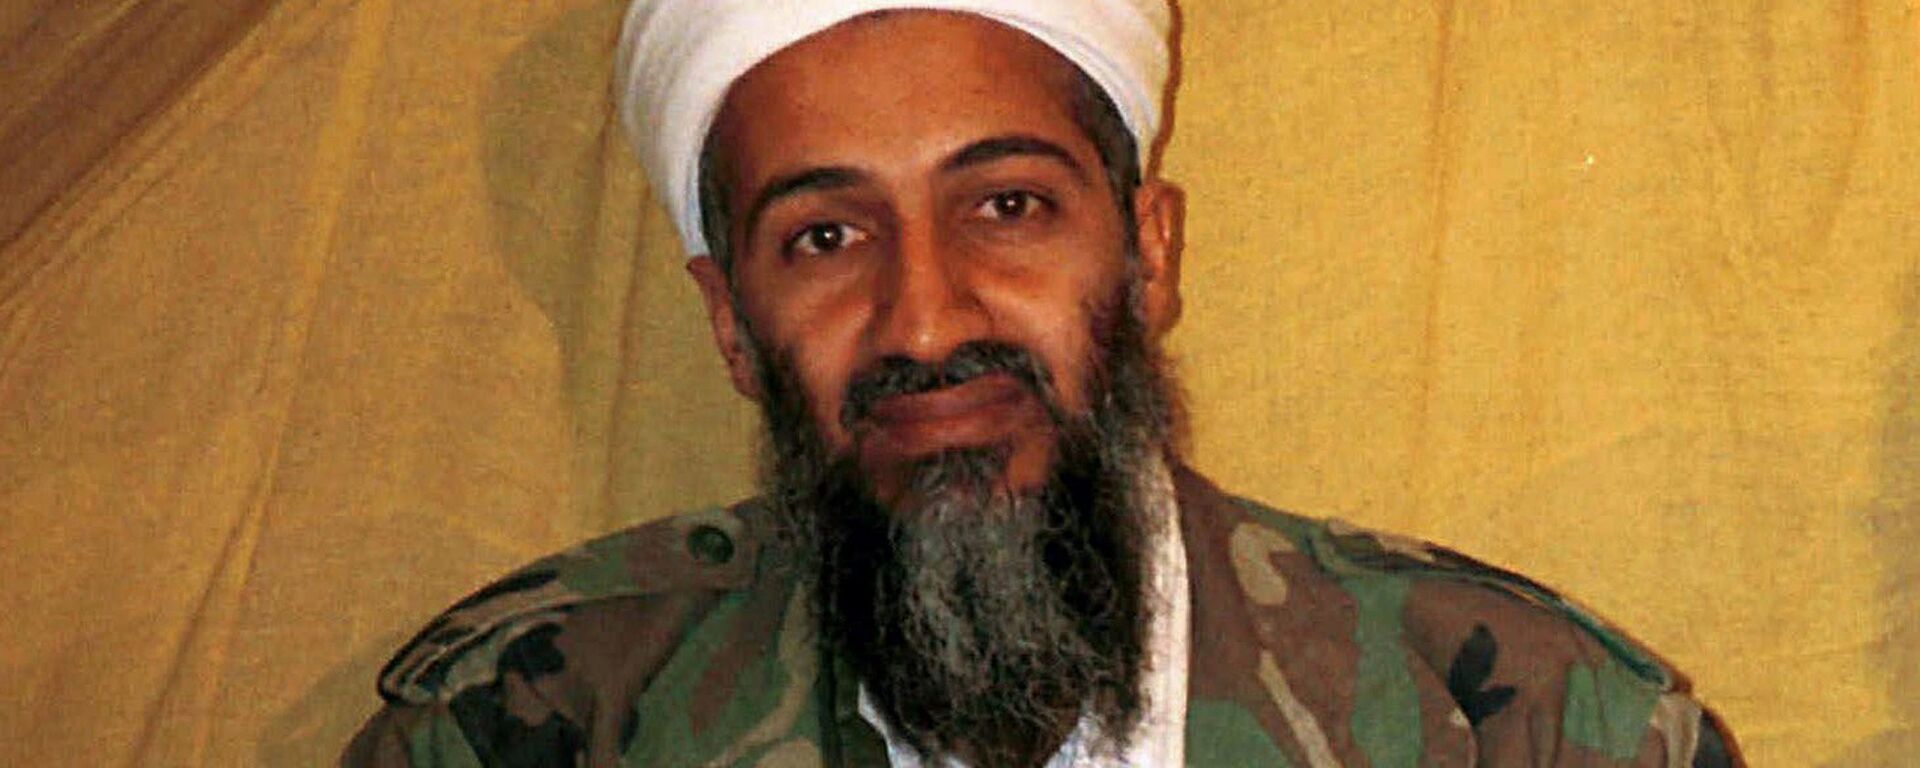 Osama bin Laden, exlíder del grupo terrorista Al Qaeda - Sputnik Mundo, 1920, 02.08.2021